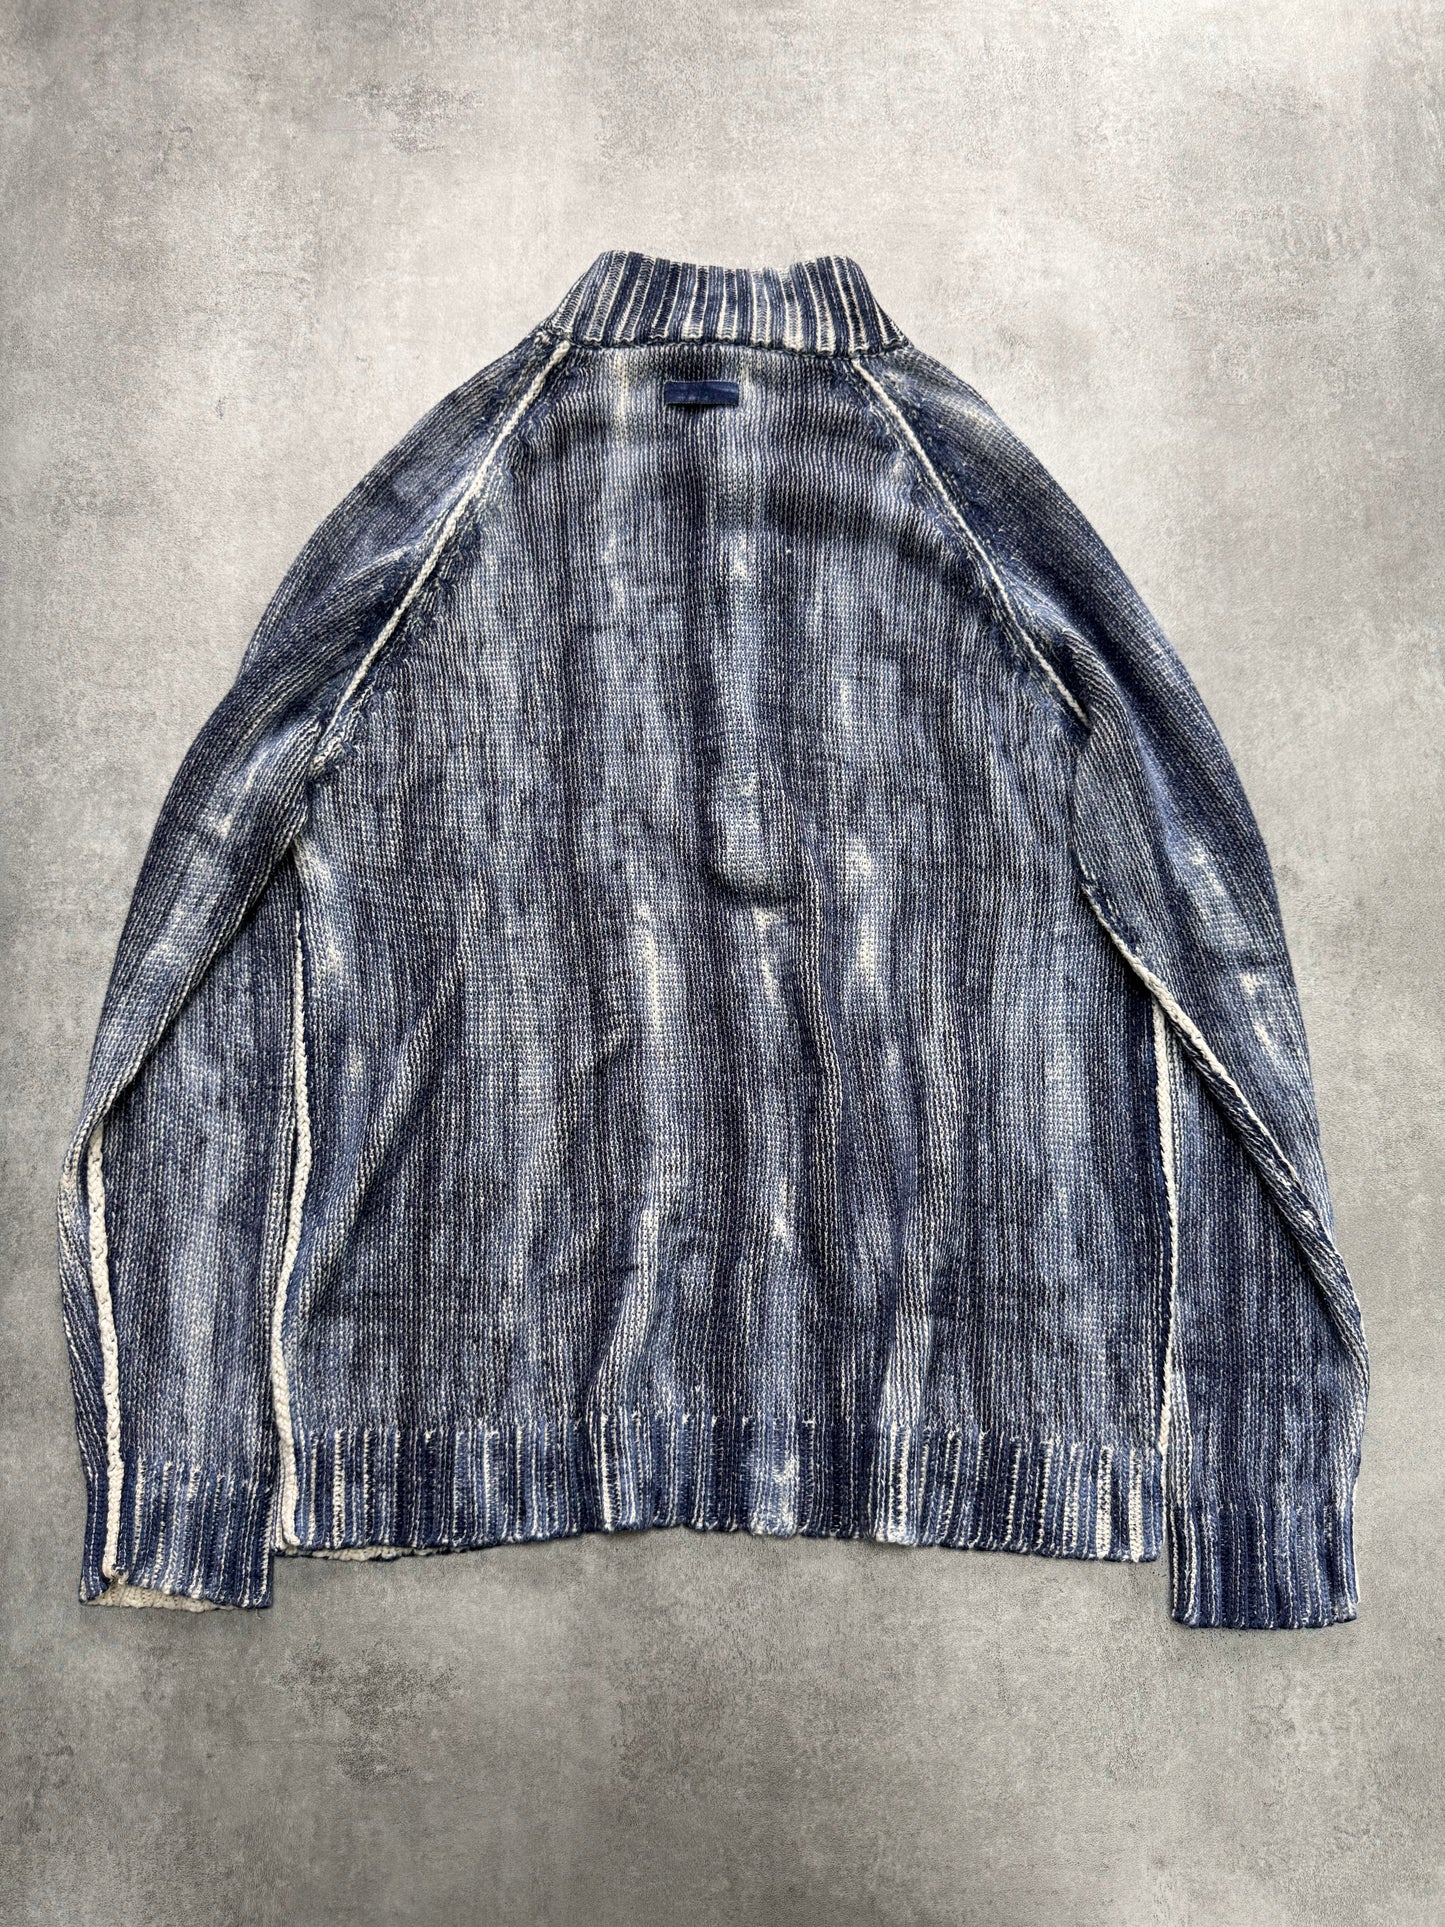 Dolce & Gabbana Iceberg Overprint Sweater (XL)